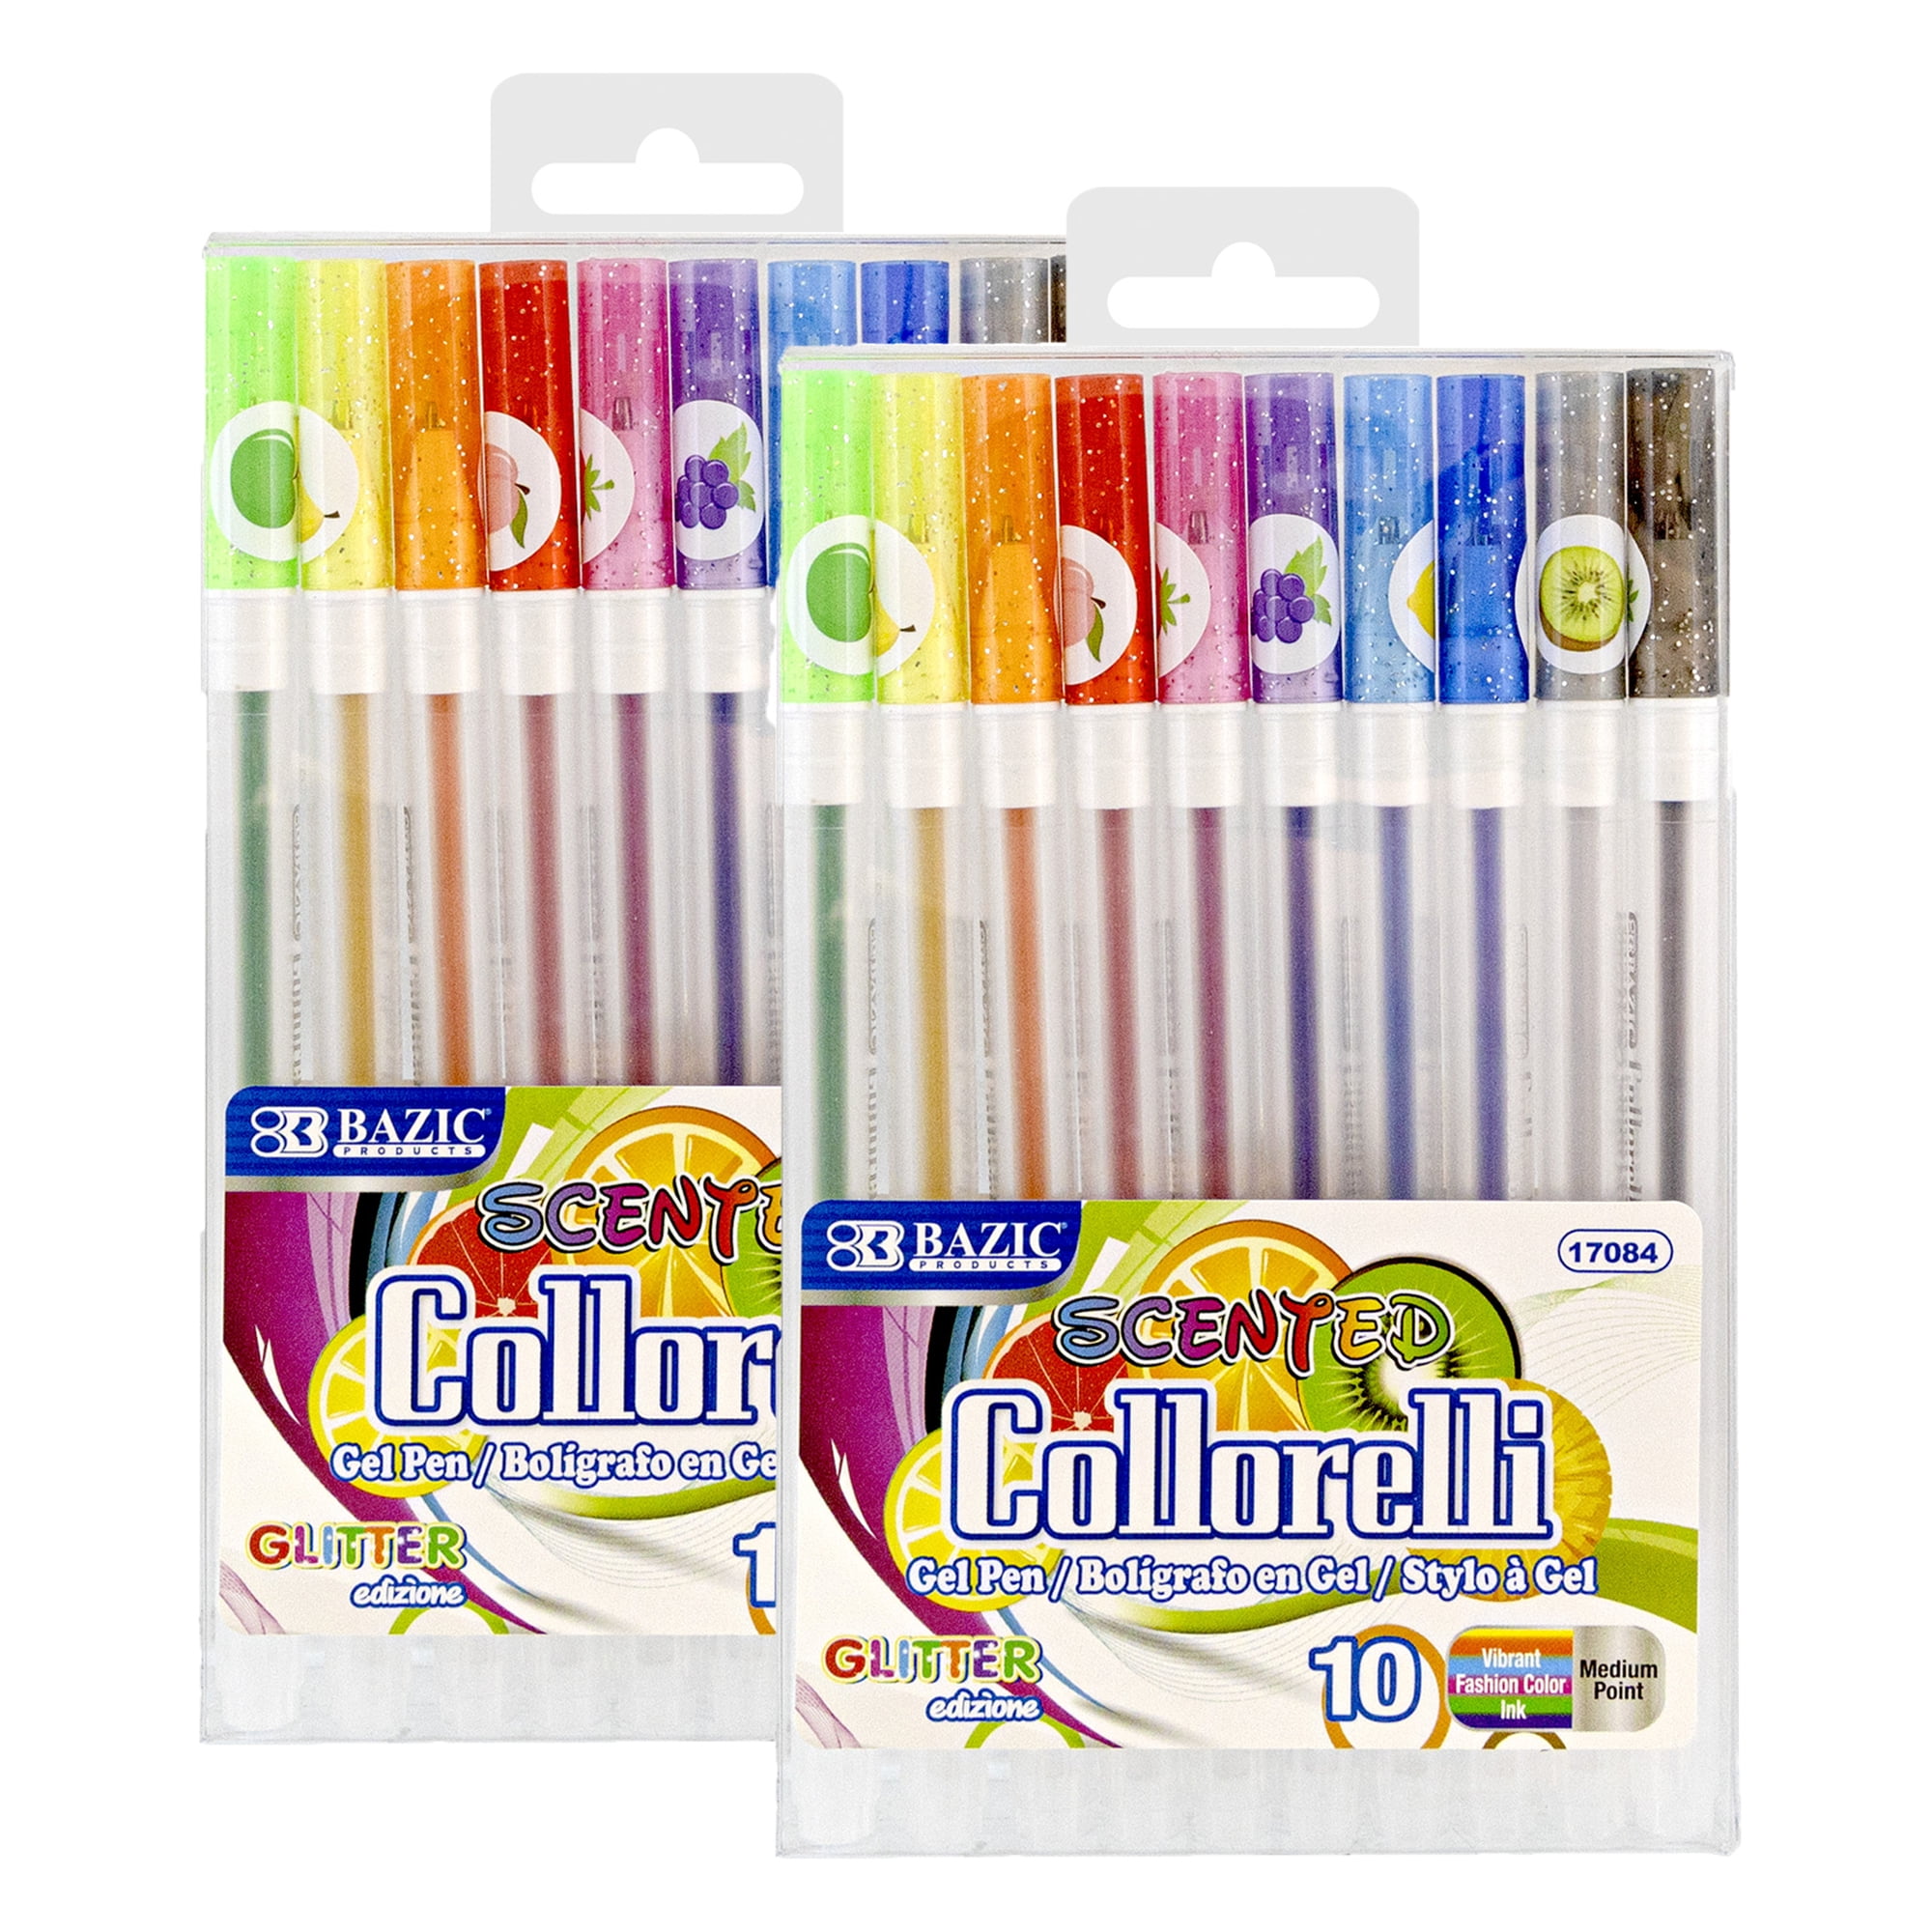 BAZIC Collorelli Scented Glitter Color Gel Pen (10/Pack), 2-Packs 